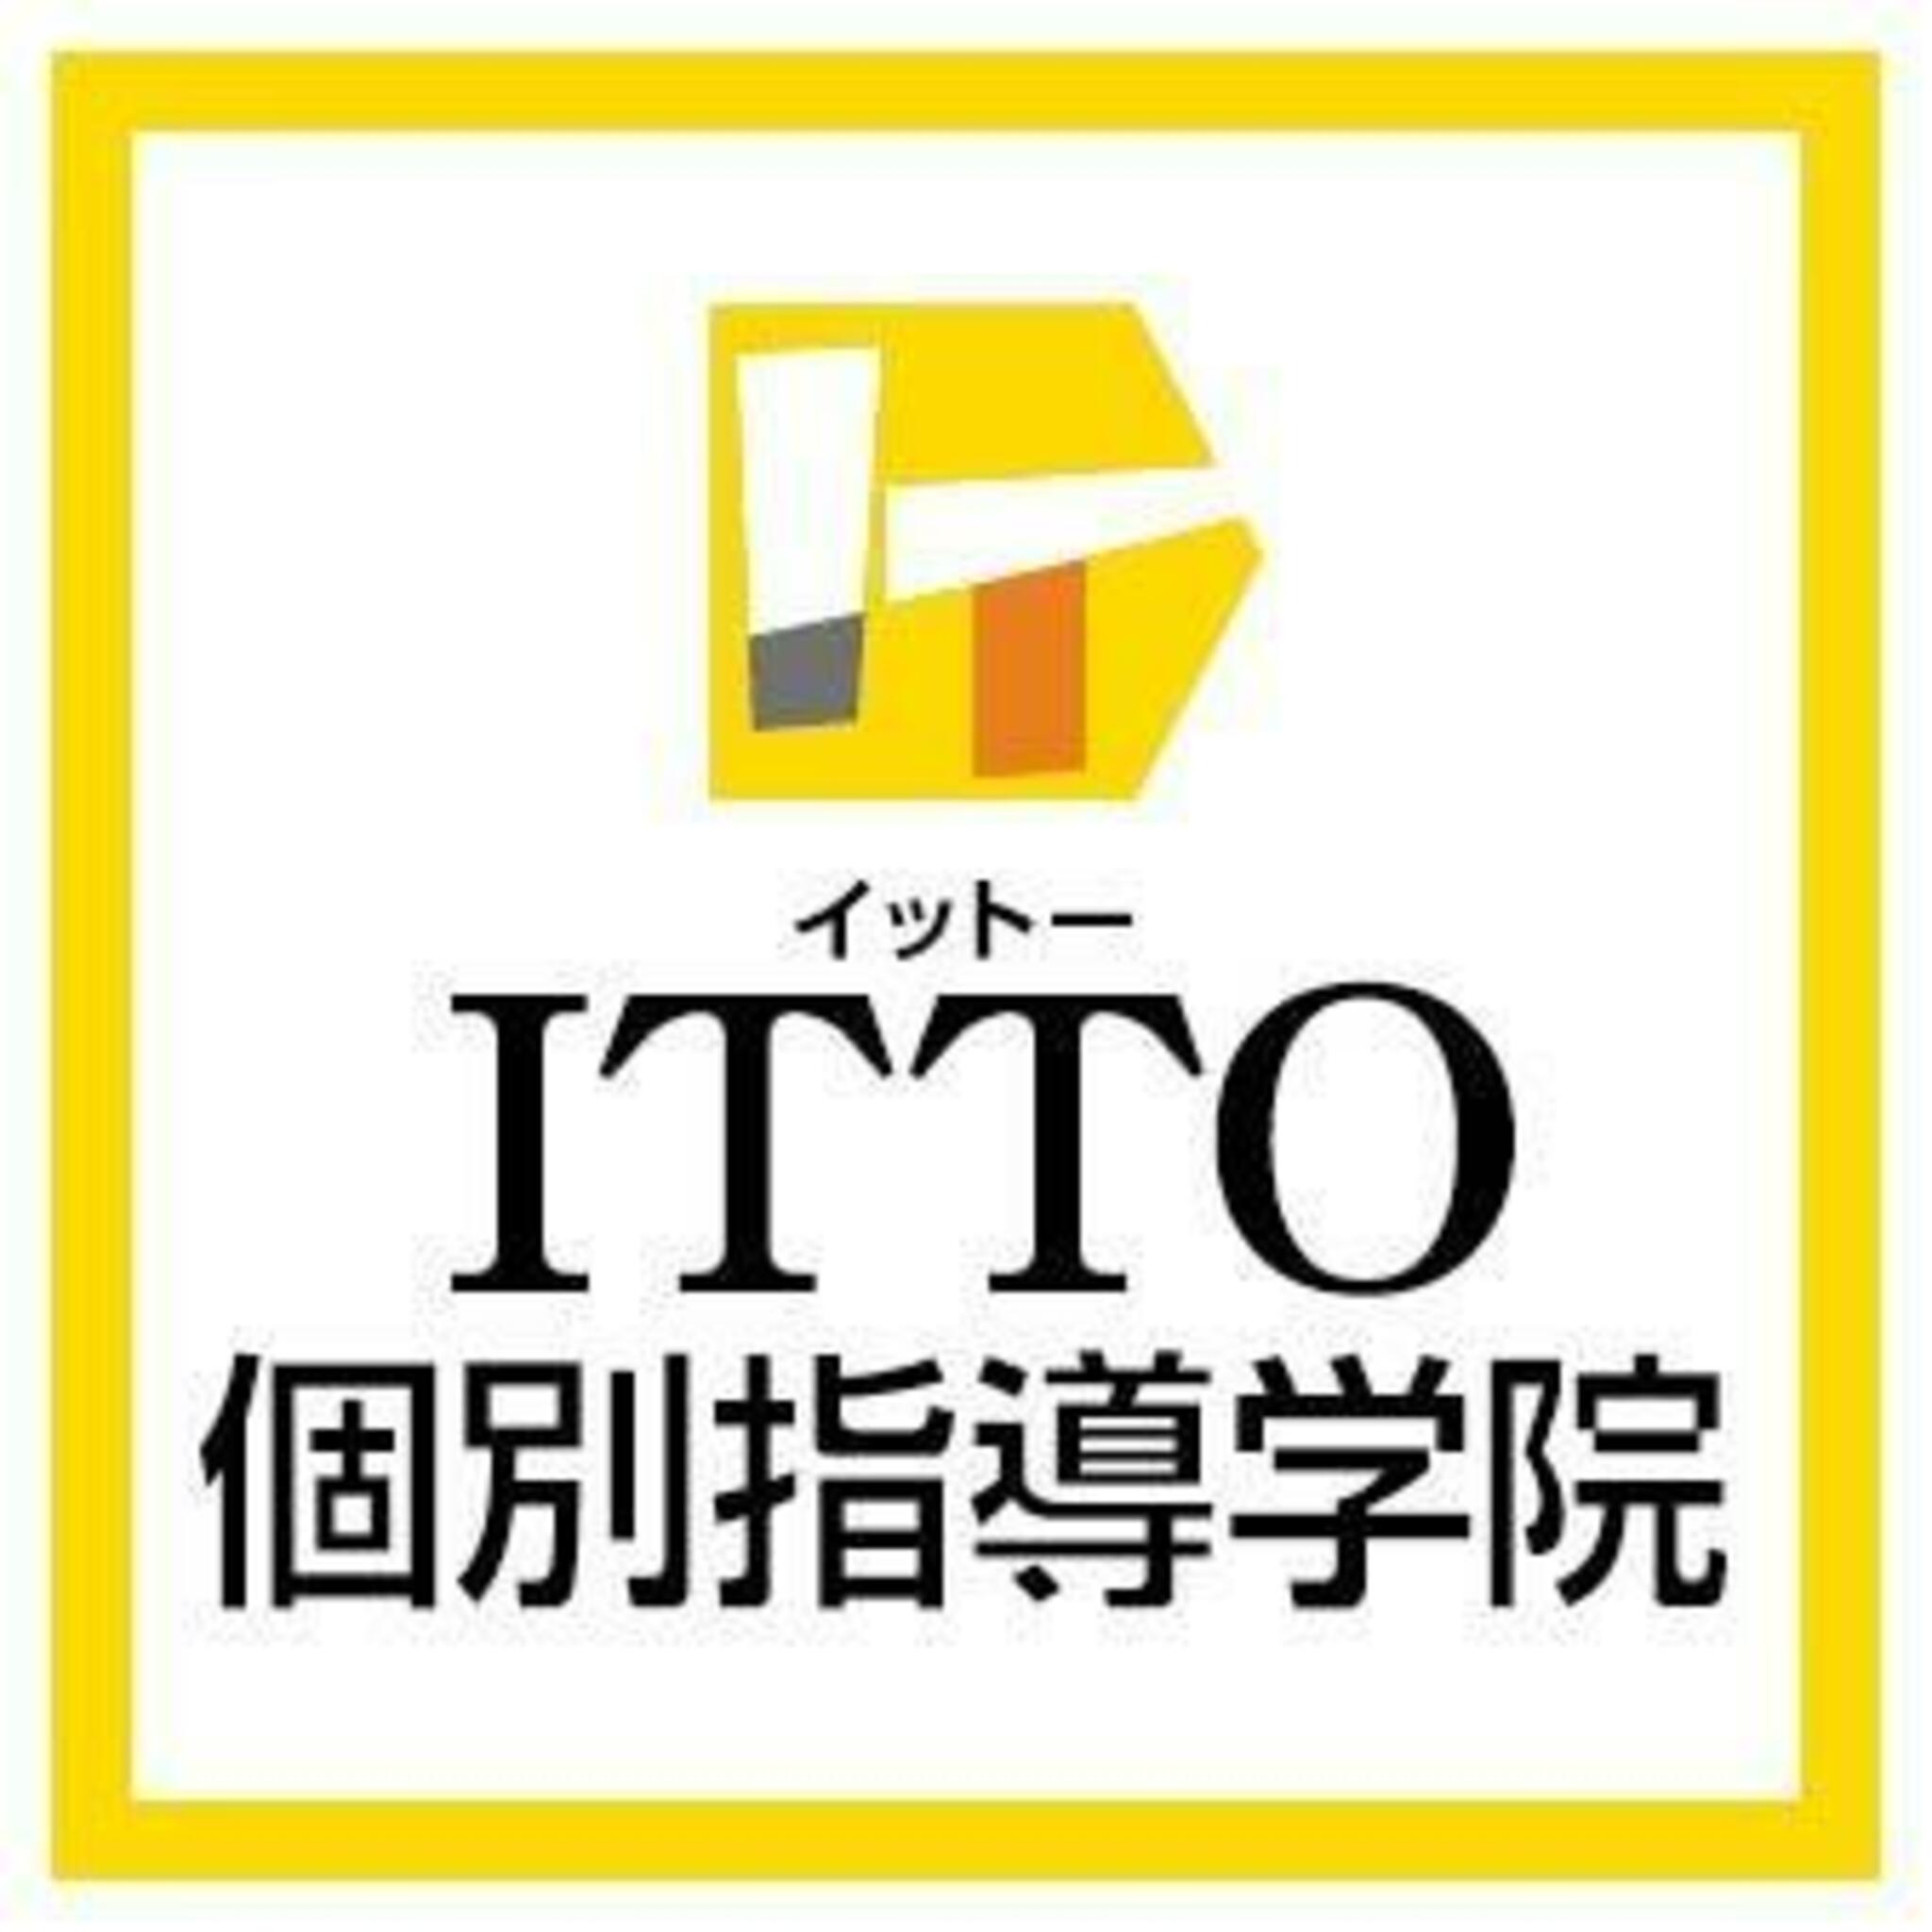 ITTO個別指導学院 十和田校の代表写真10